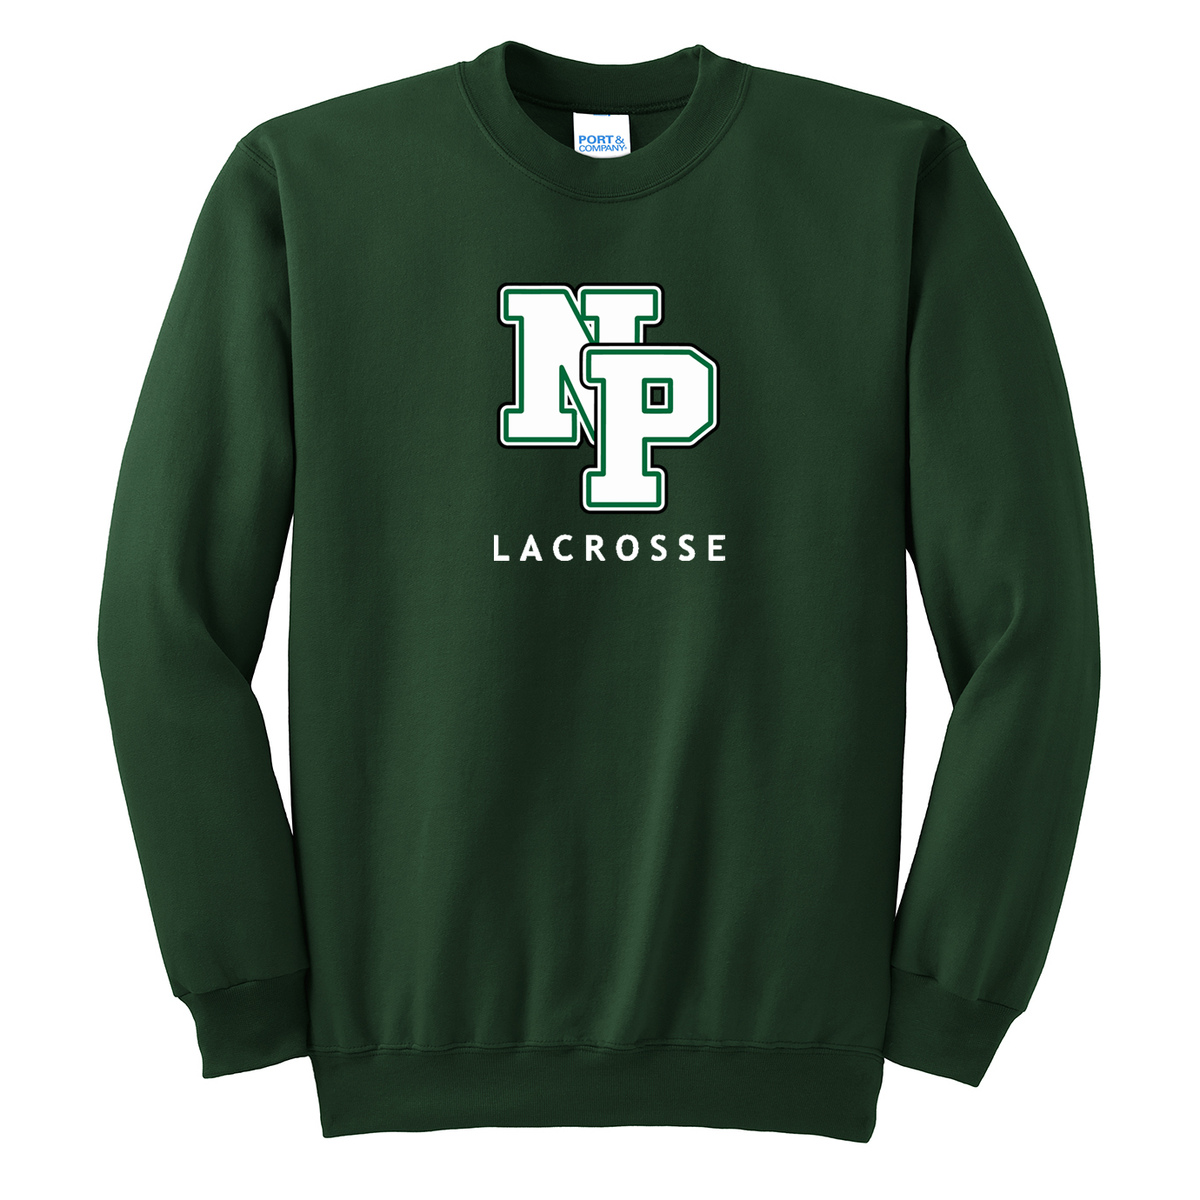 New Providence Lacrosse Crew Neck Sweater